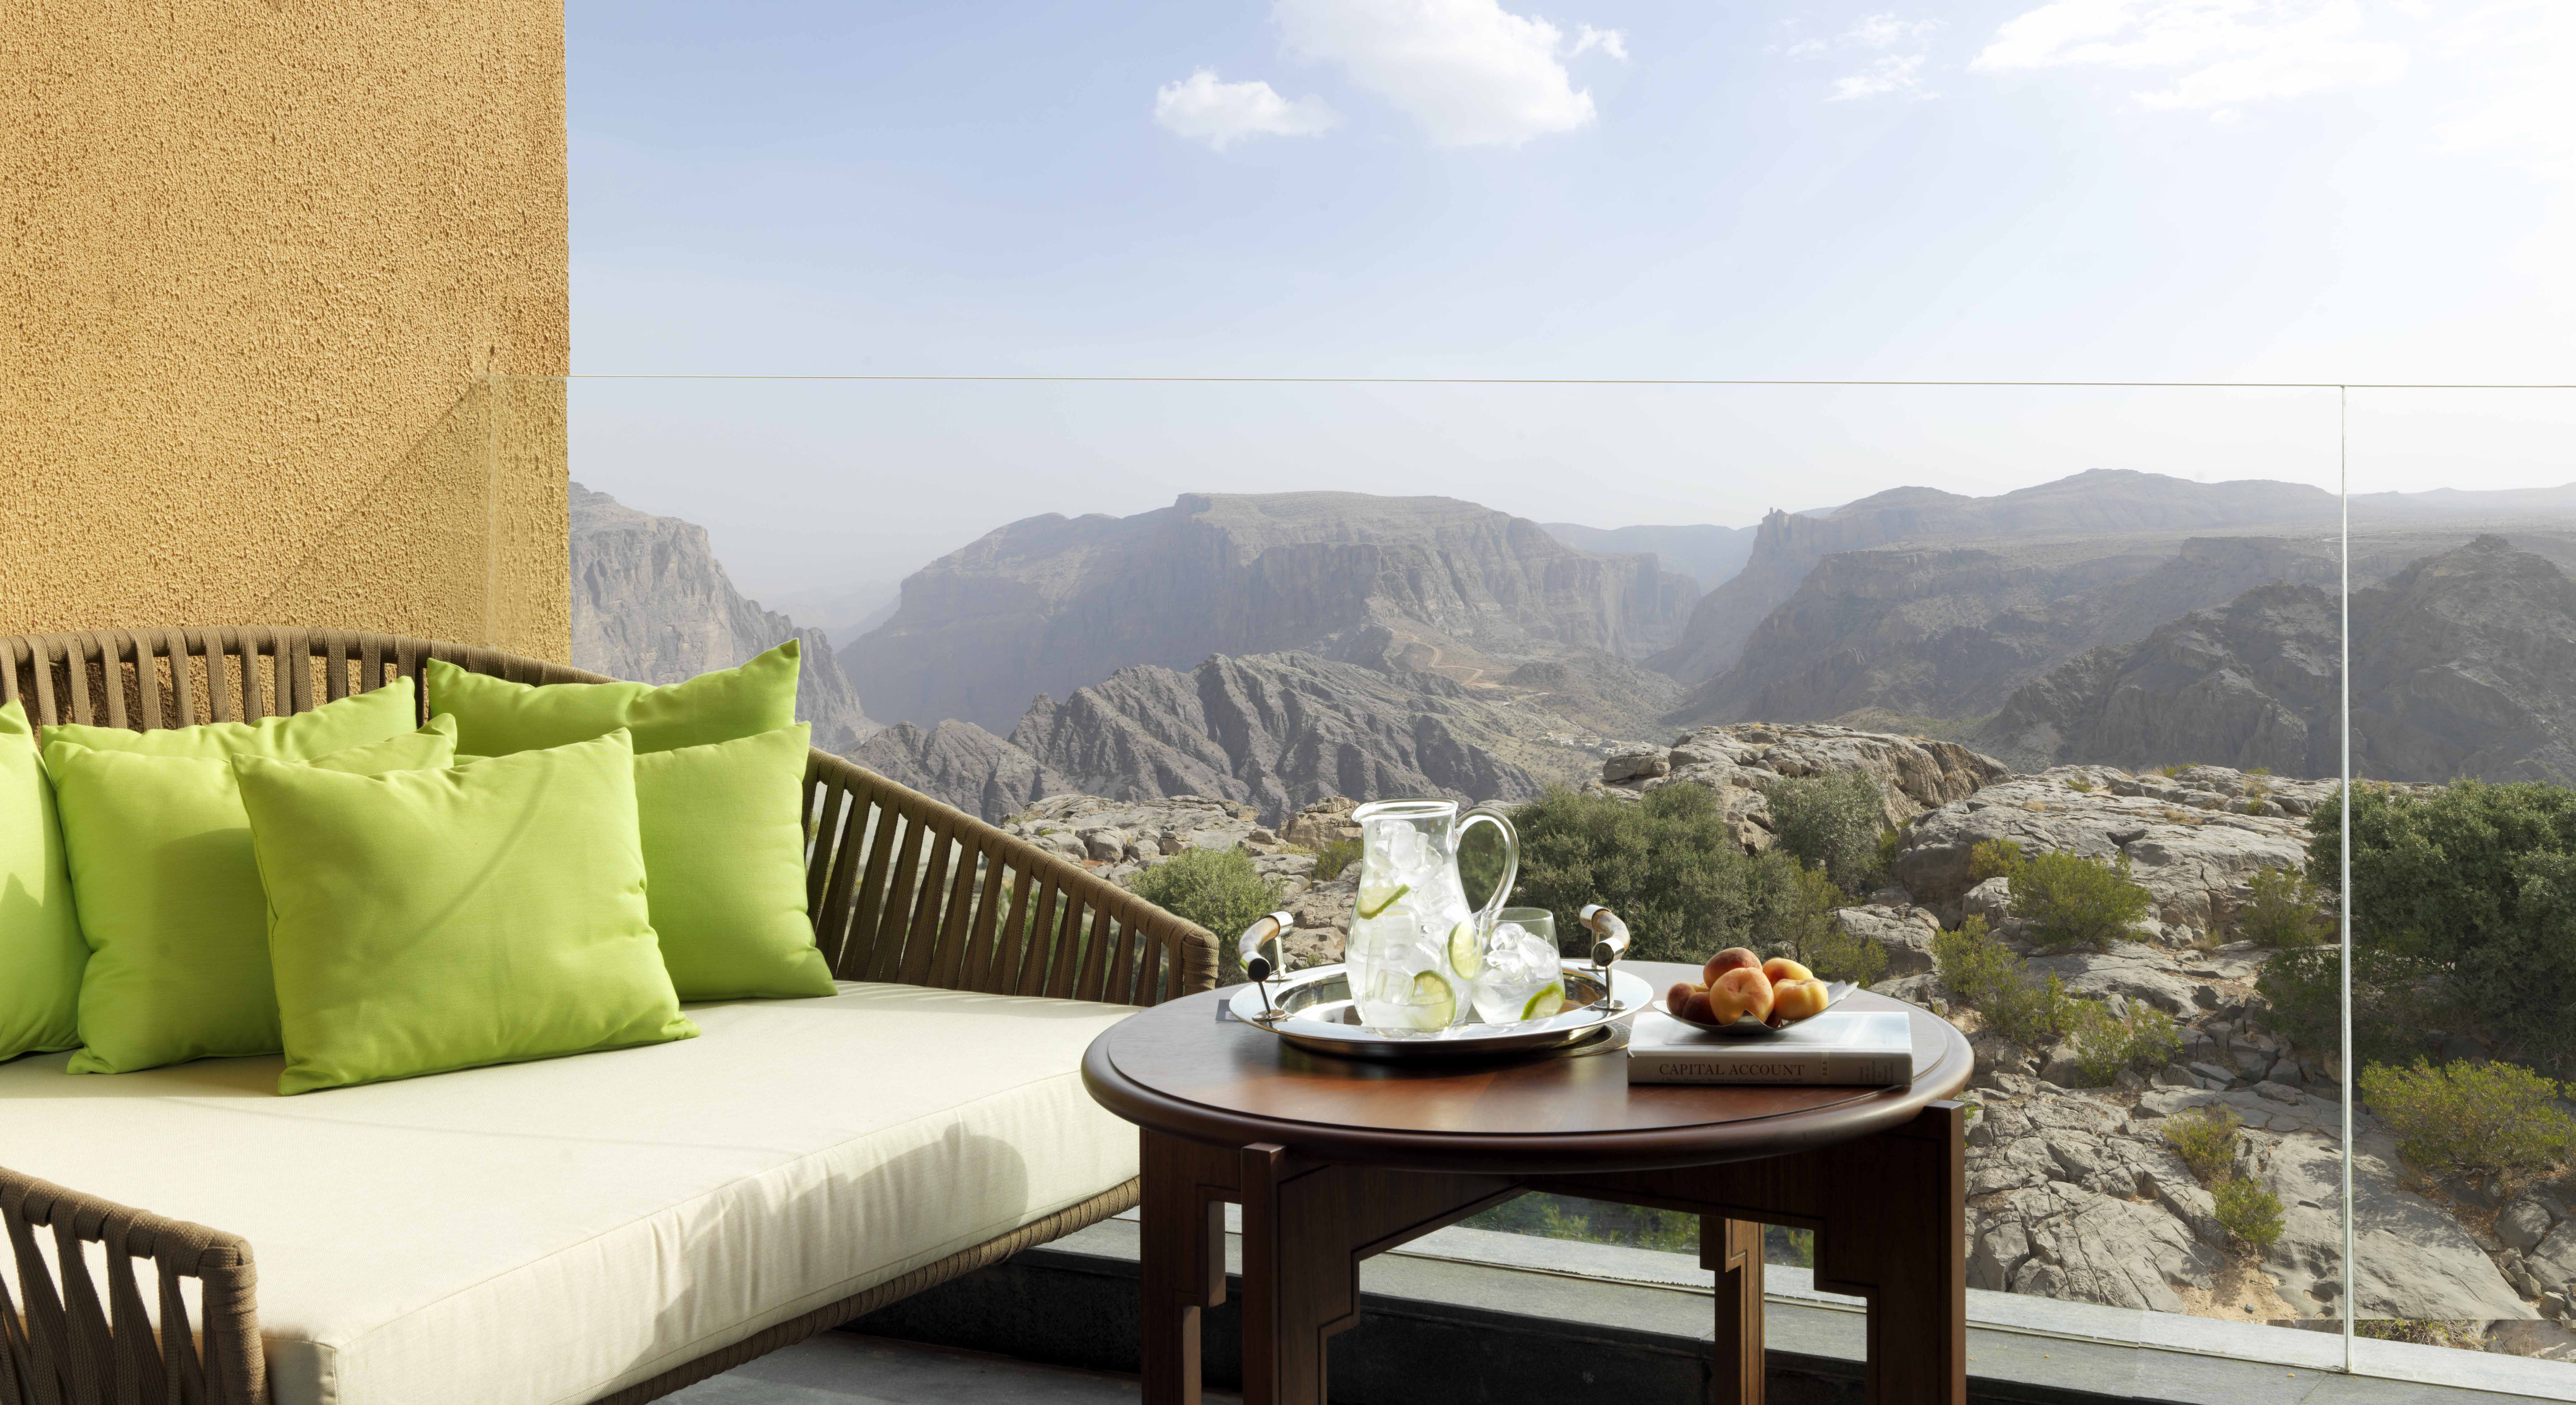 Oman tourism: Anantara Al Jabal Al Akhdar Resort opens